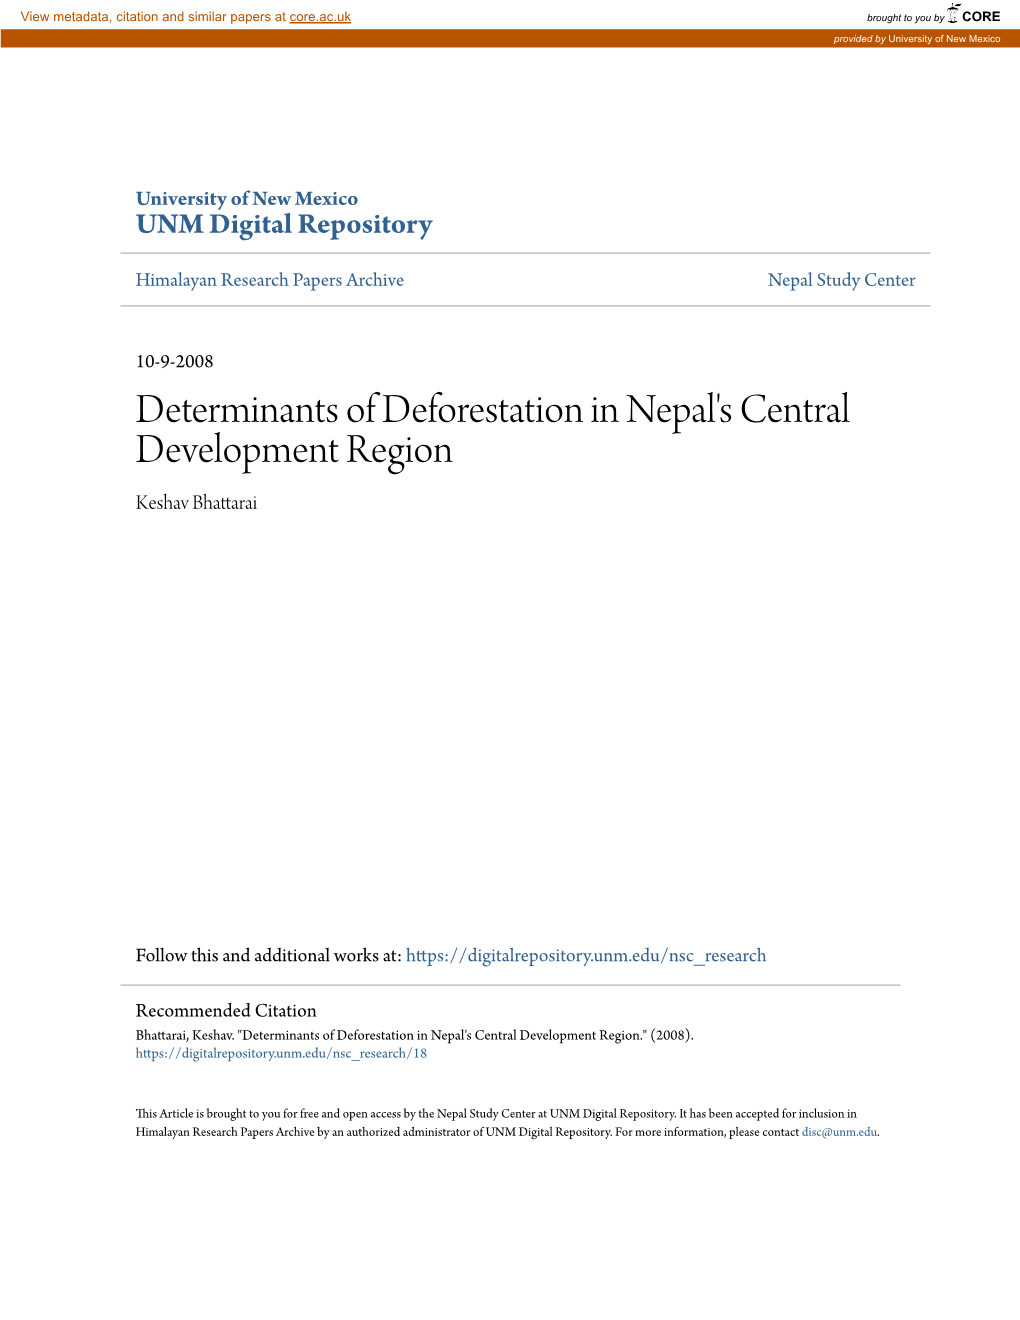 Determinants of Deforestation in Nepal's Central Development Region Keshav Bhattarai